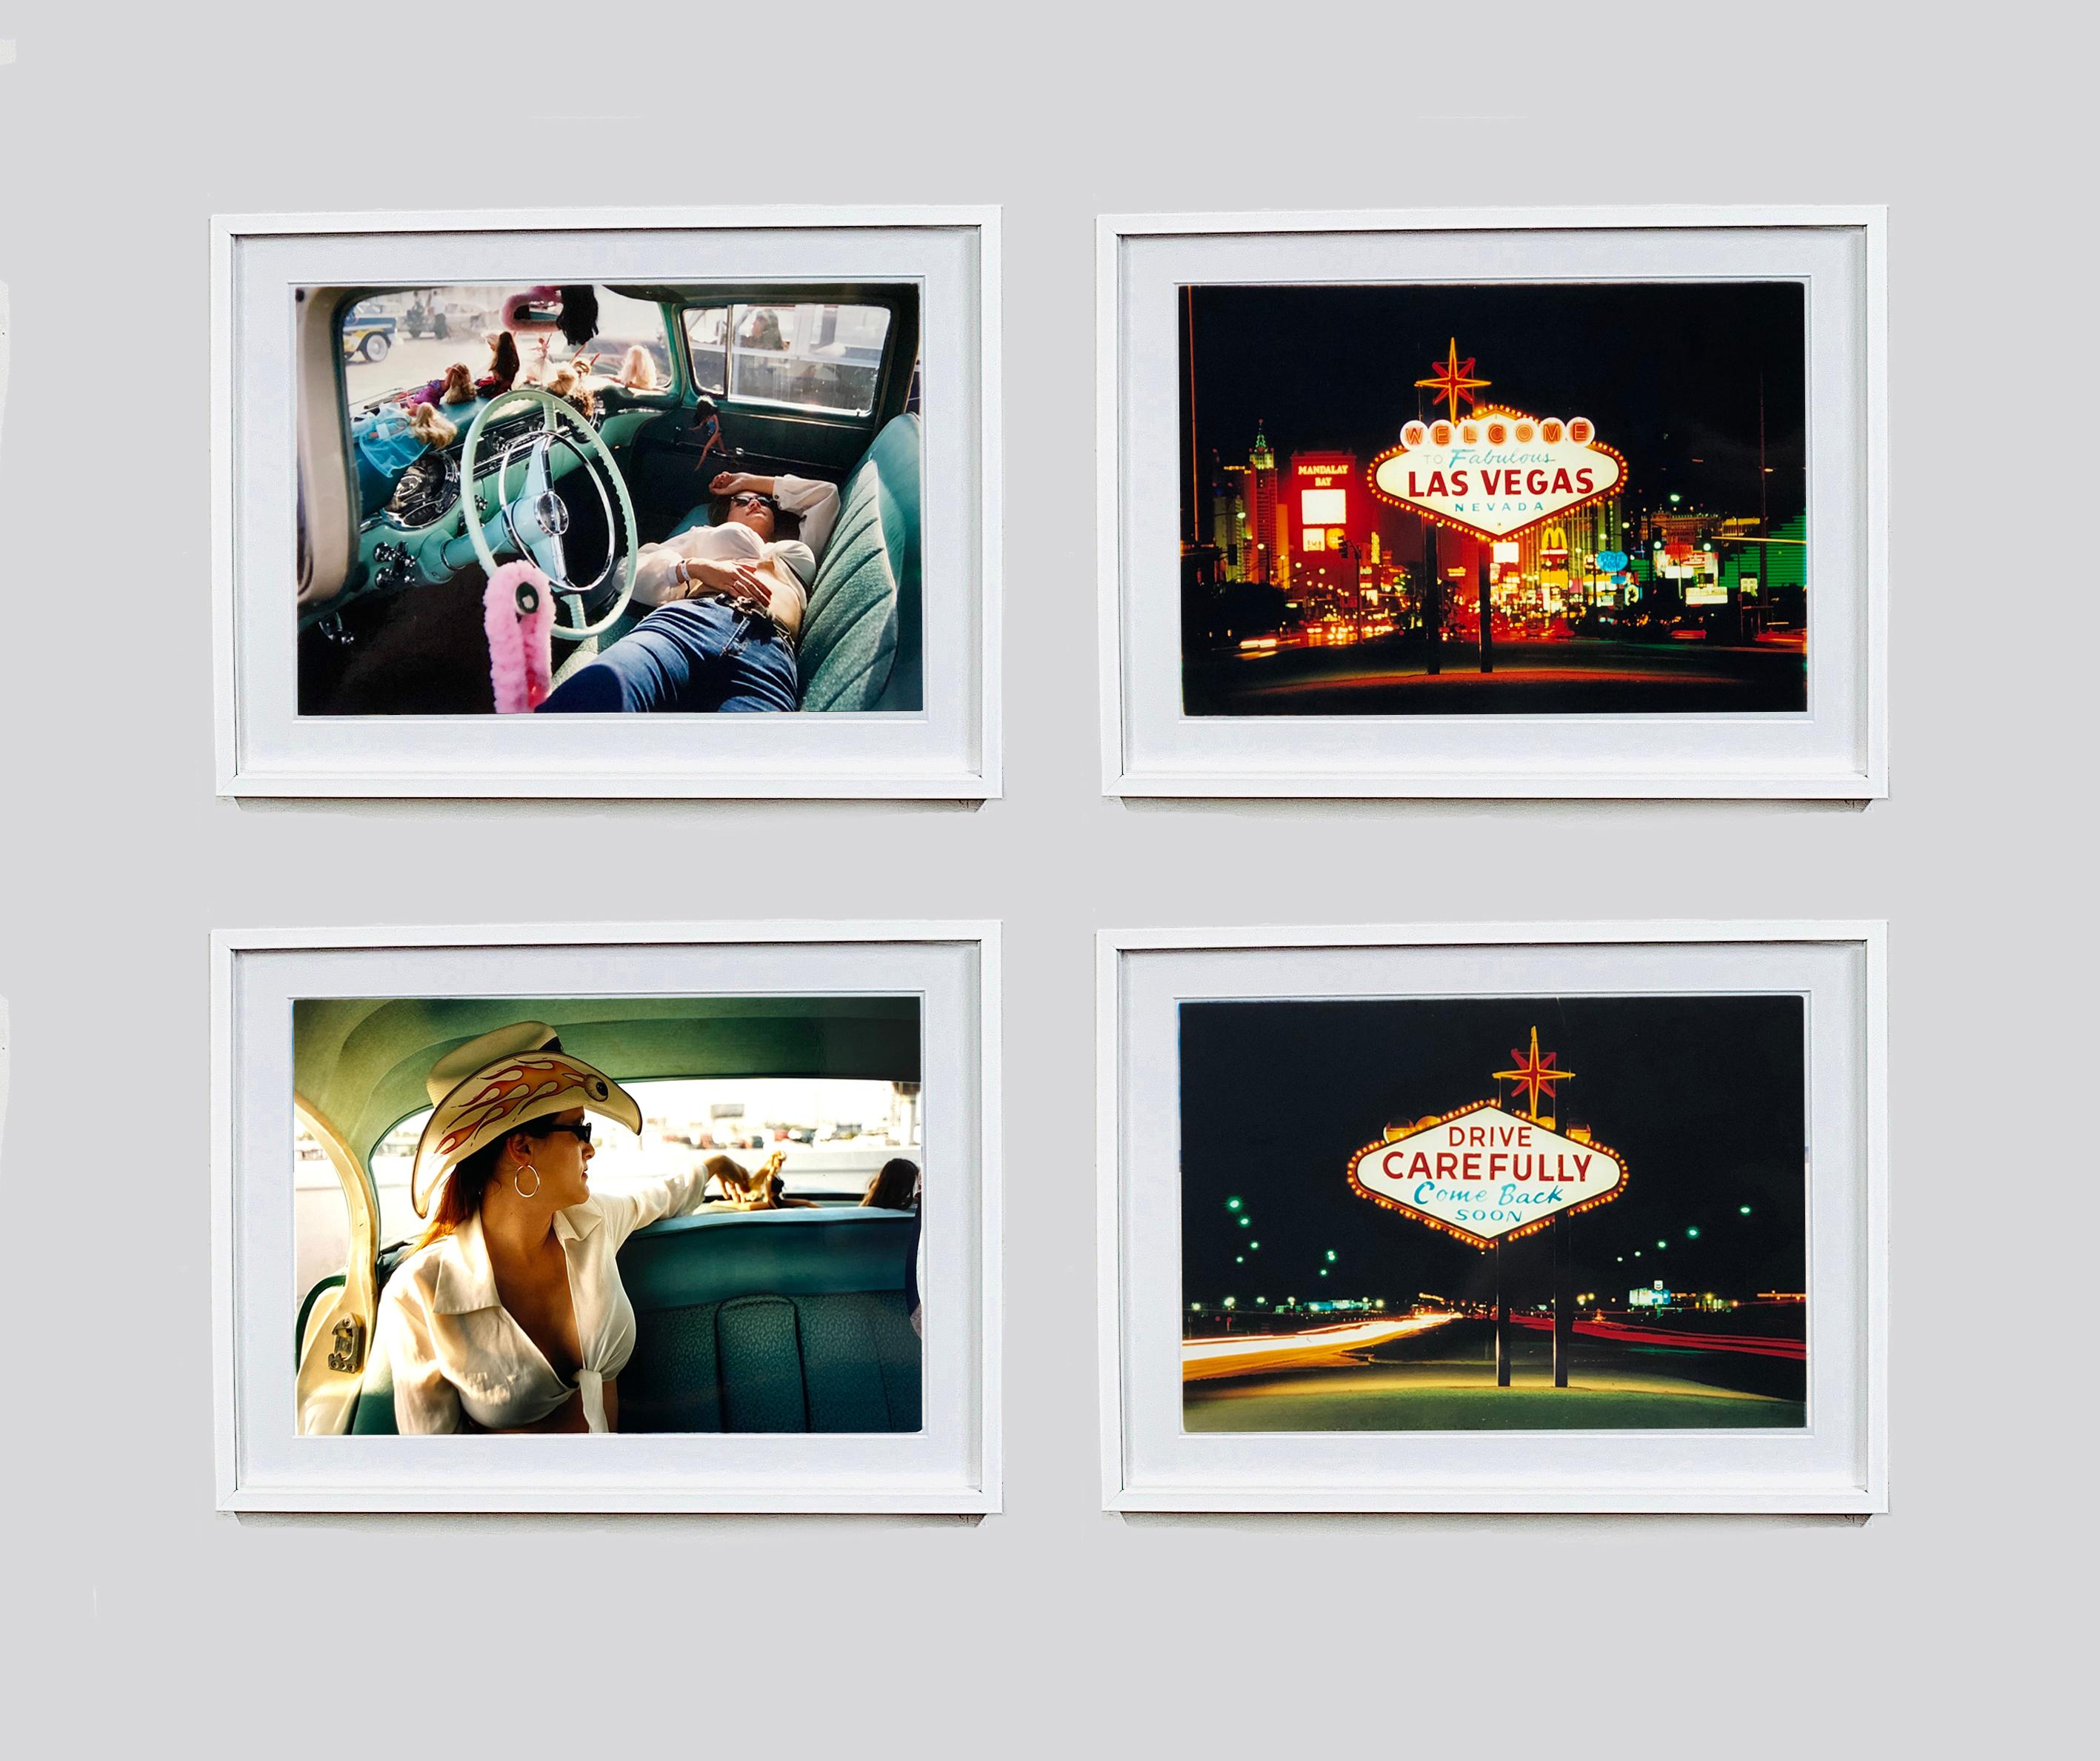 Wendy and Dolls, Las Vegas - Contemporary Portrait Color Photography For Sale 4